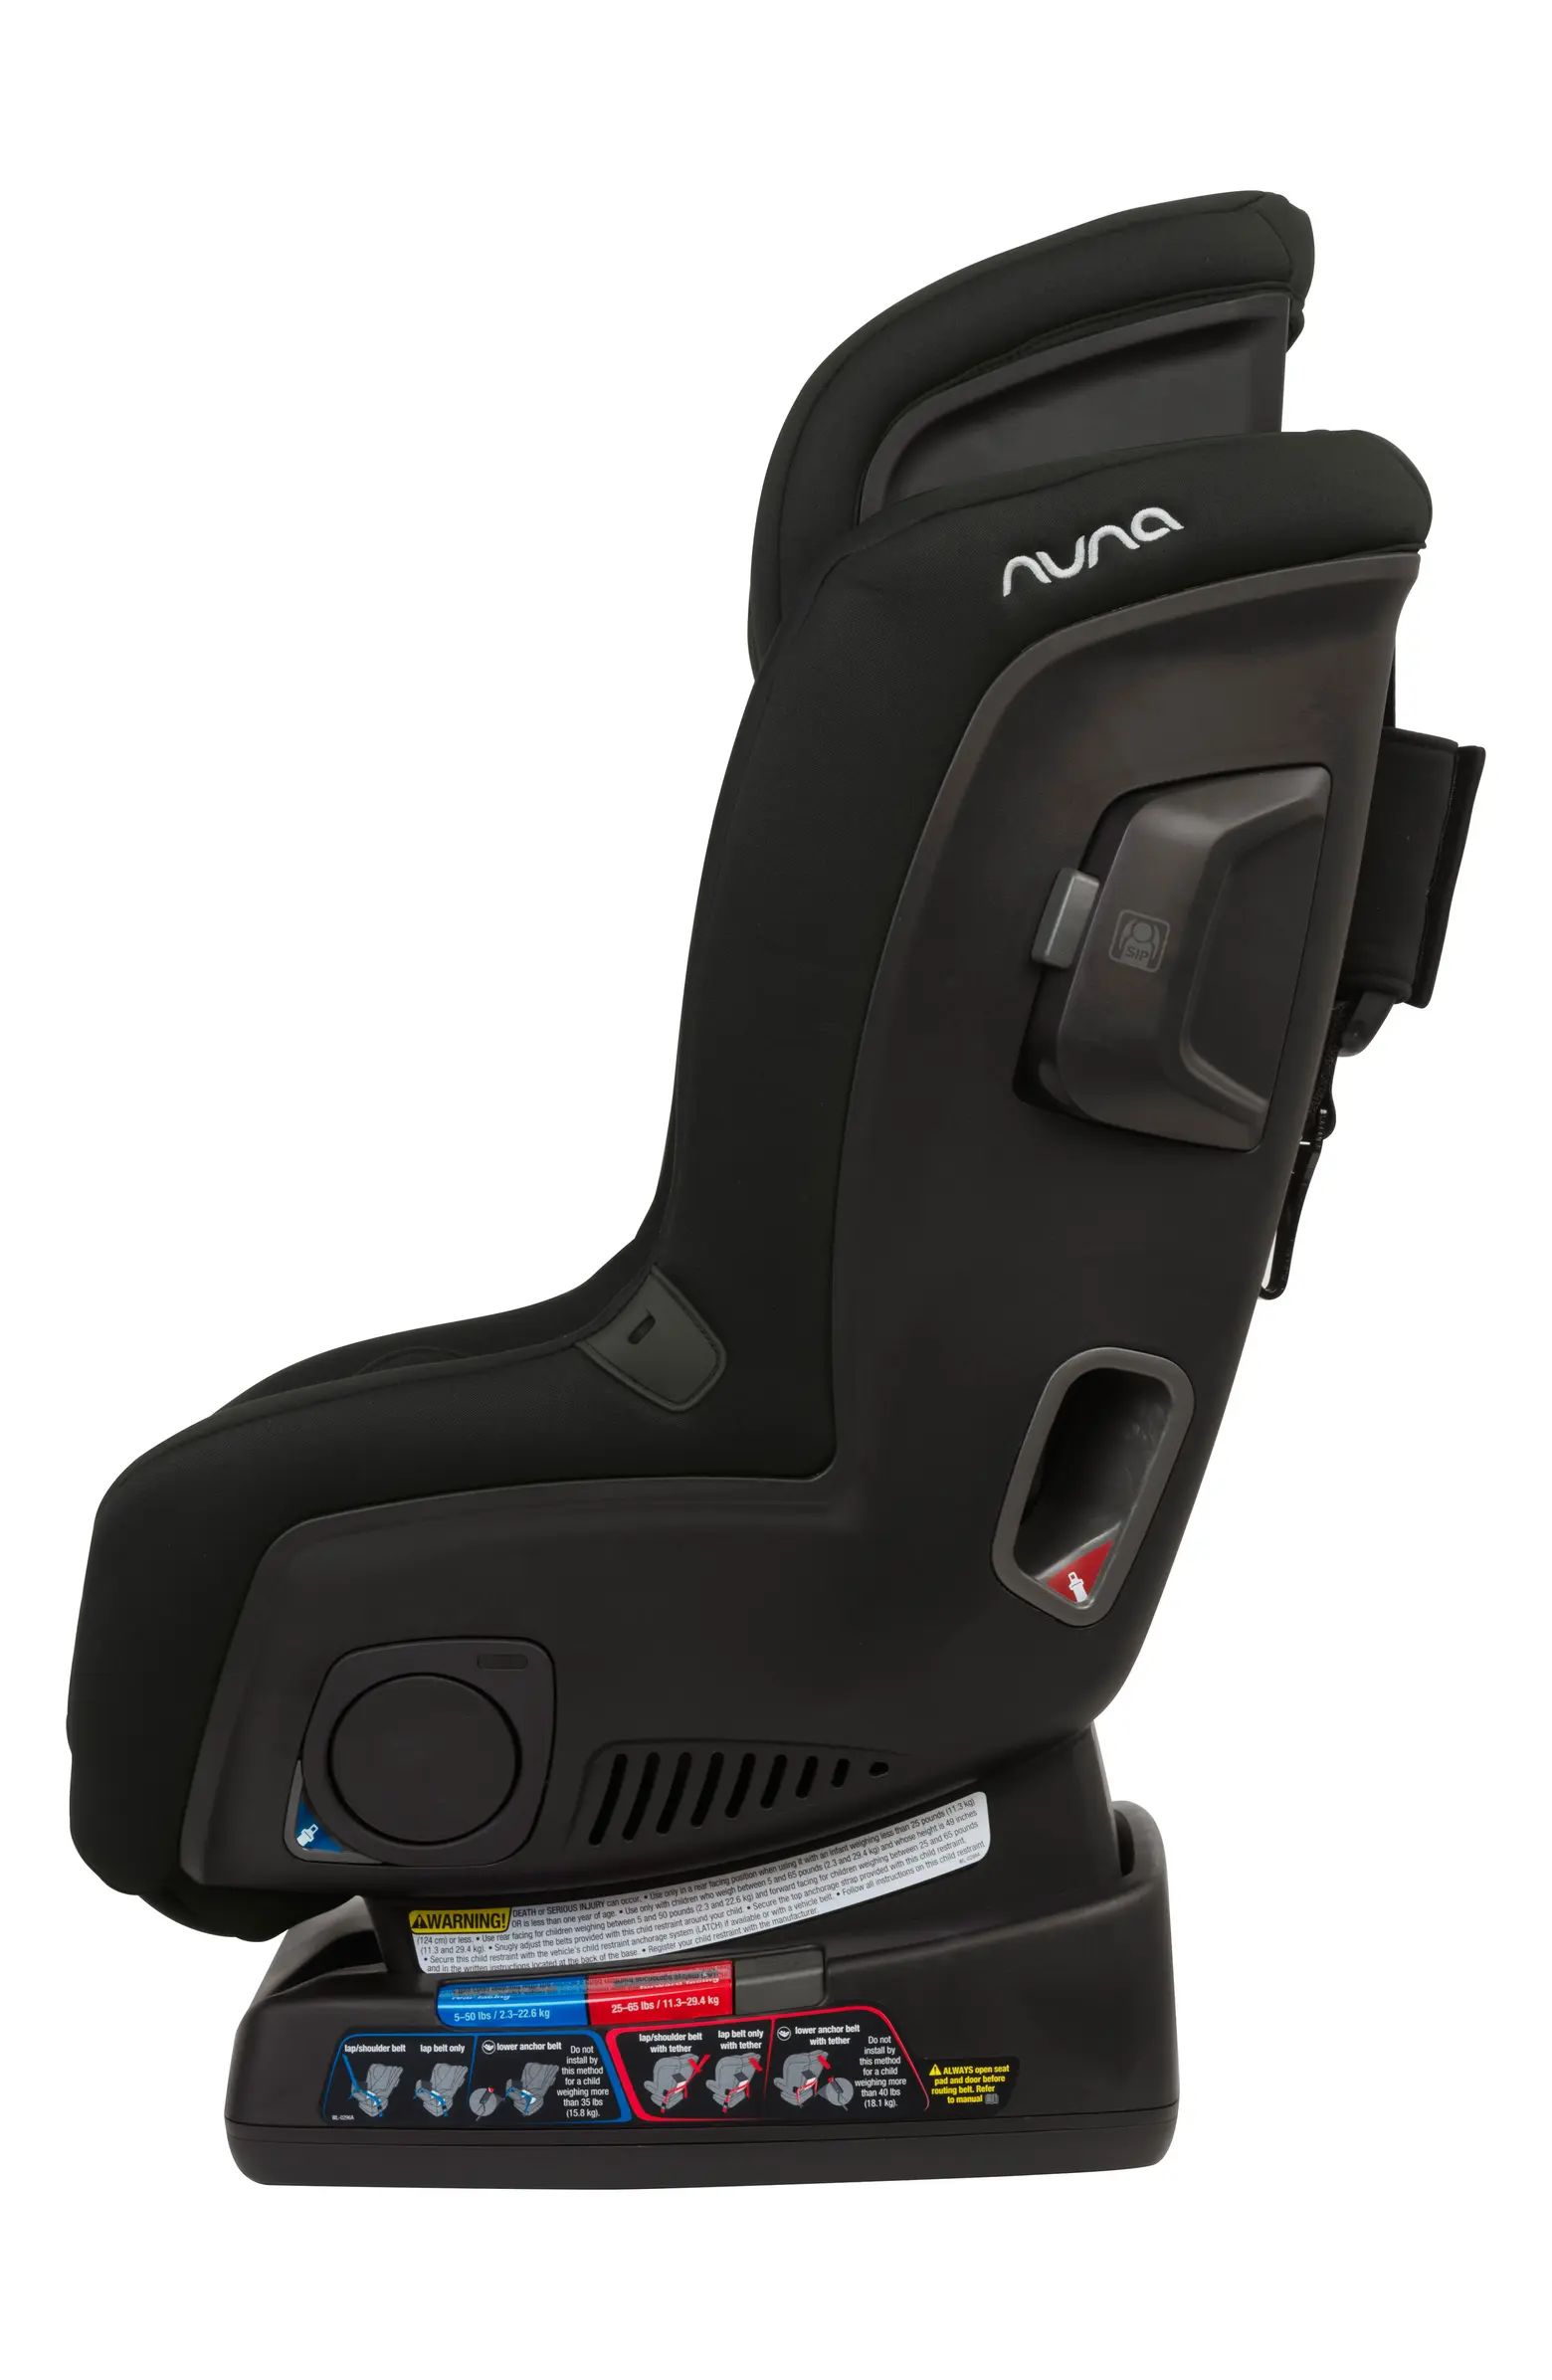 Nuna RAVA™ Flame Retardant Free Convertible Car Seat | Nordstrom | Nordstrom